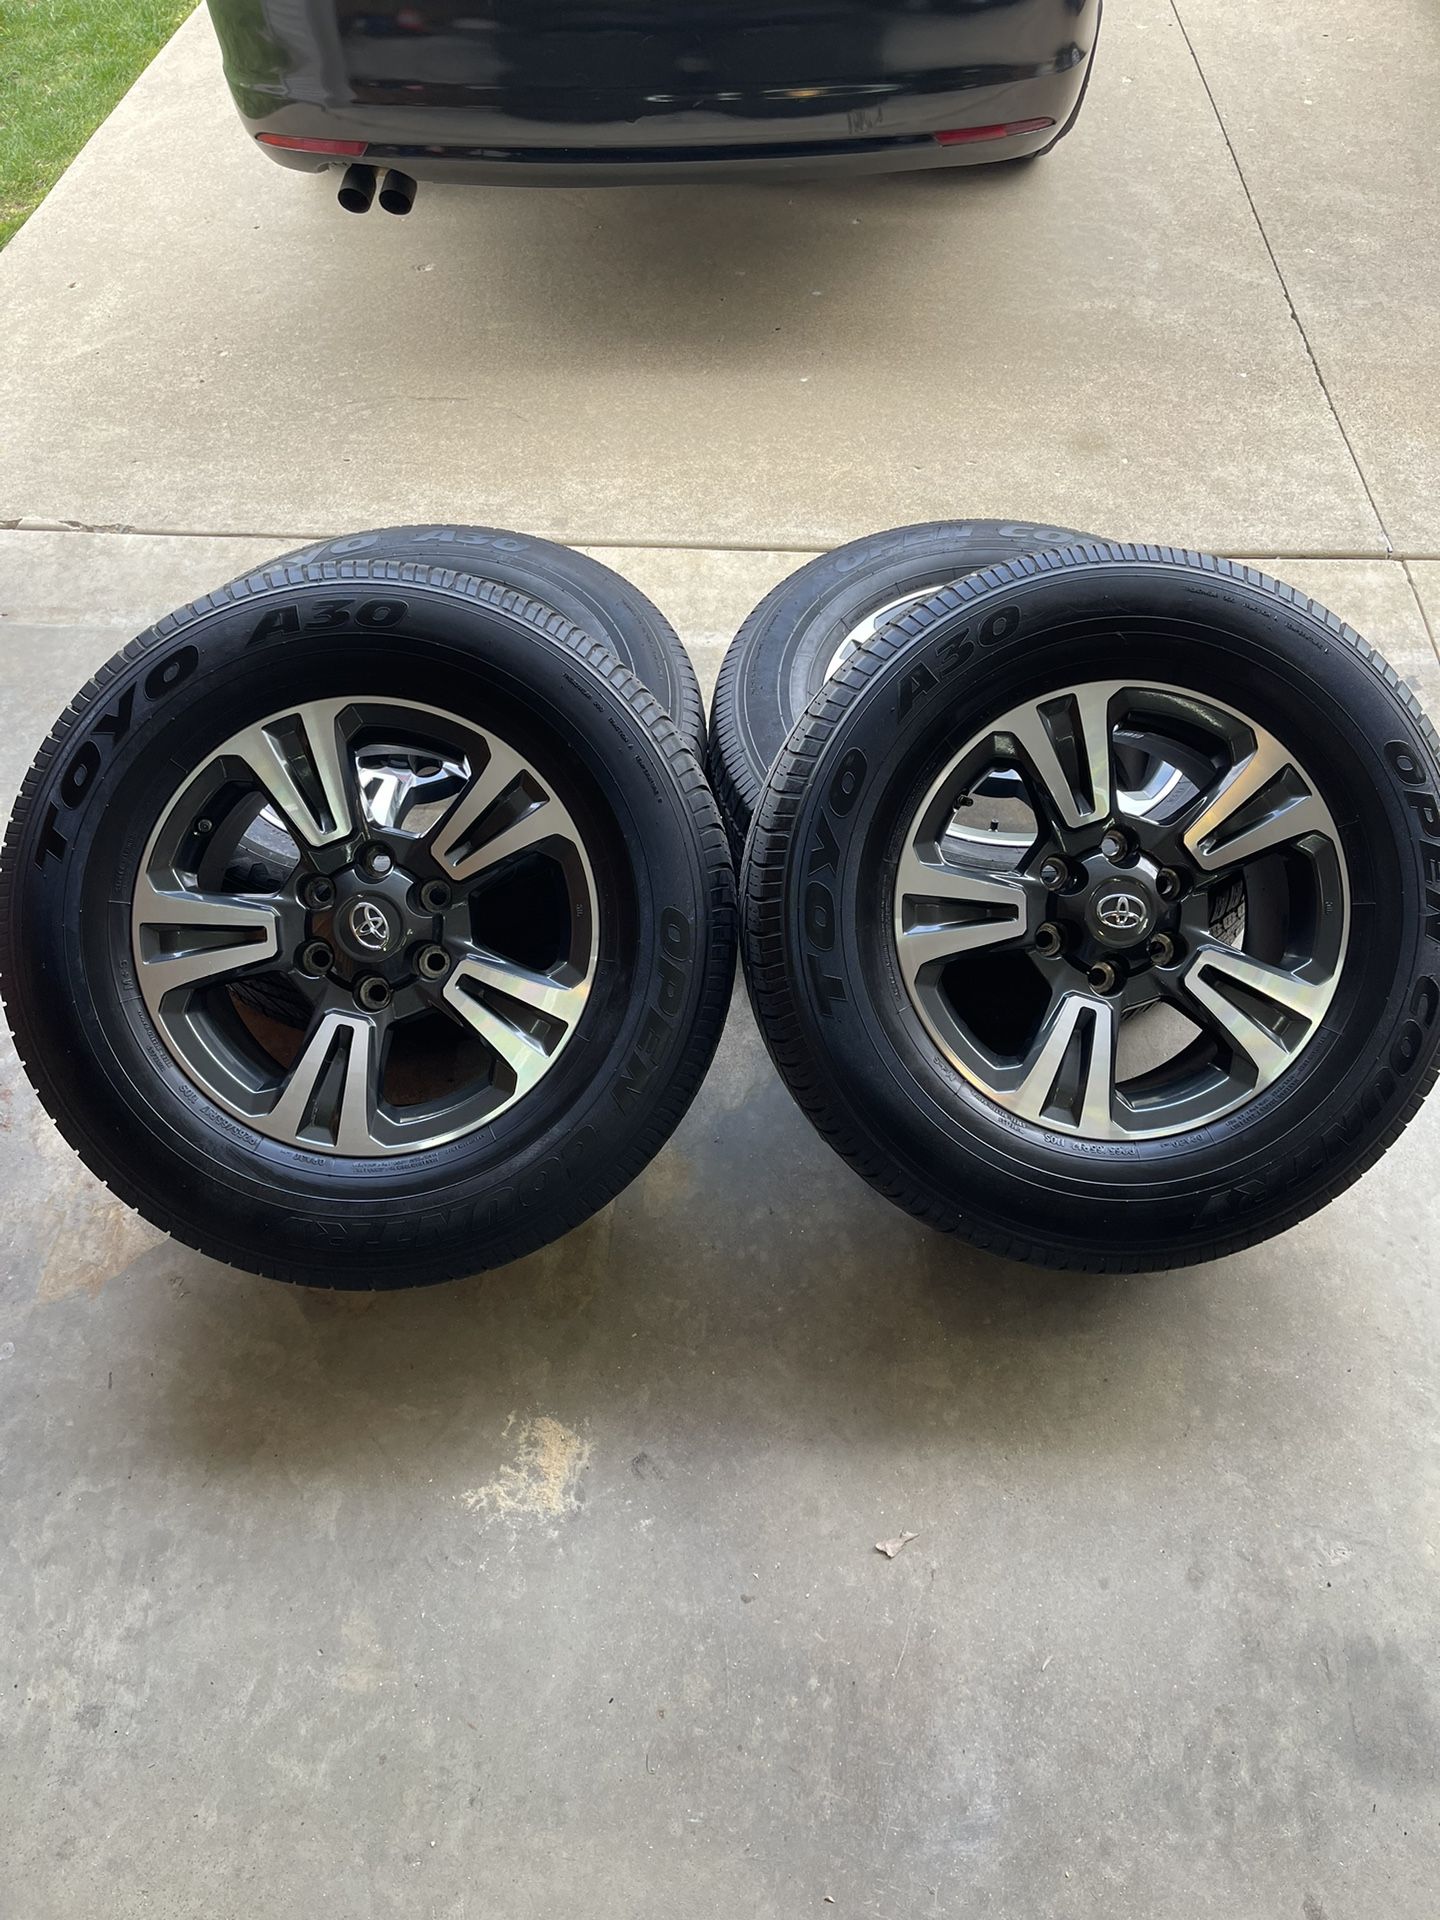 Tacoma Wheels And Tires